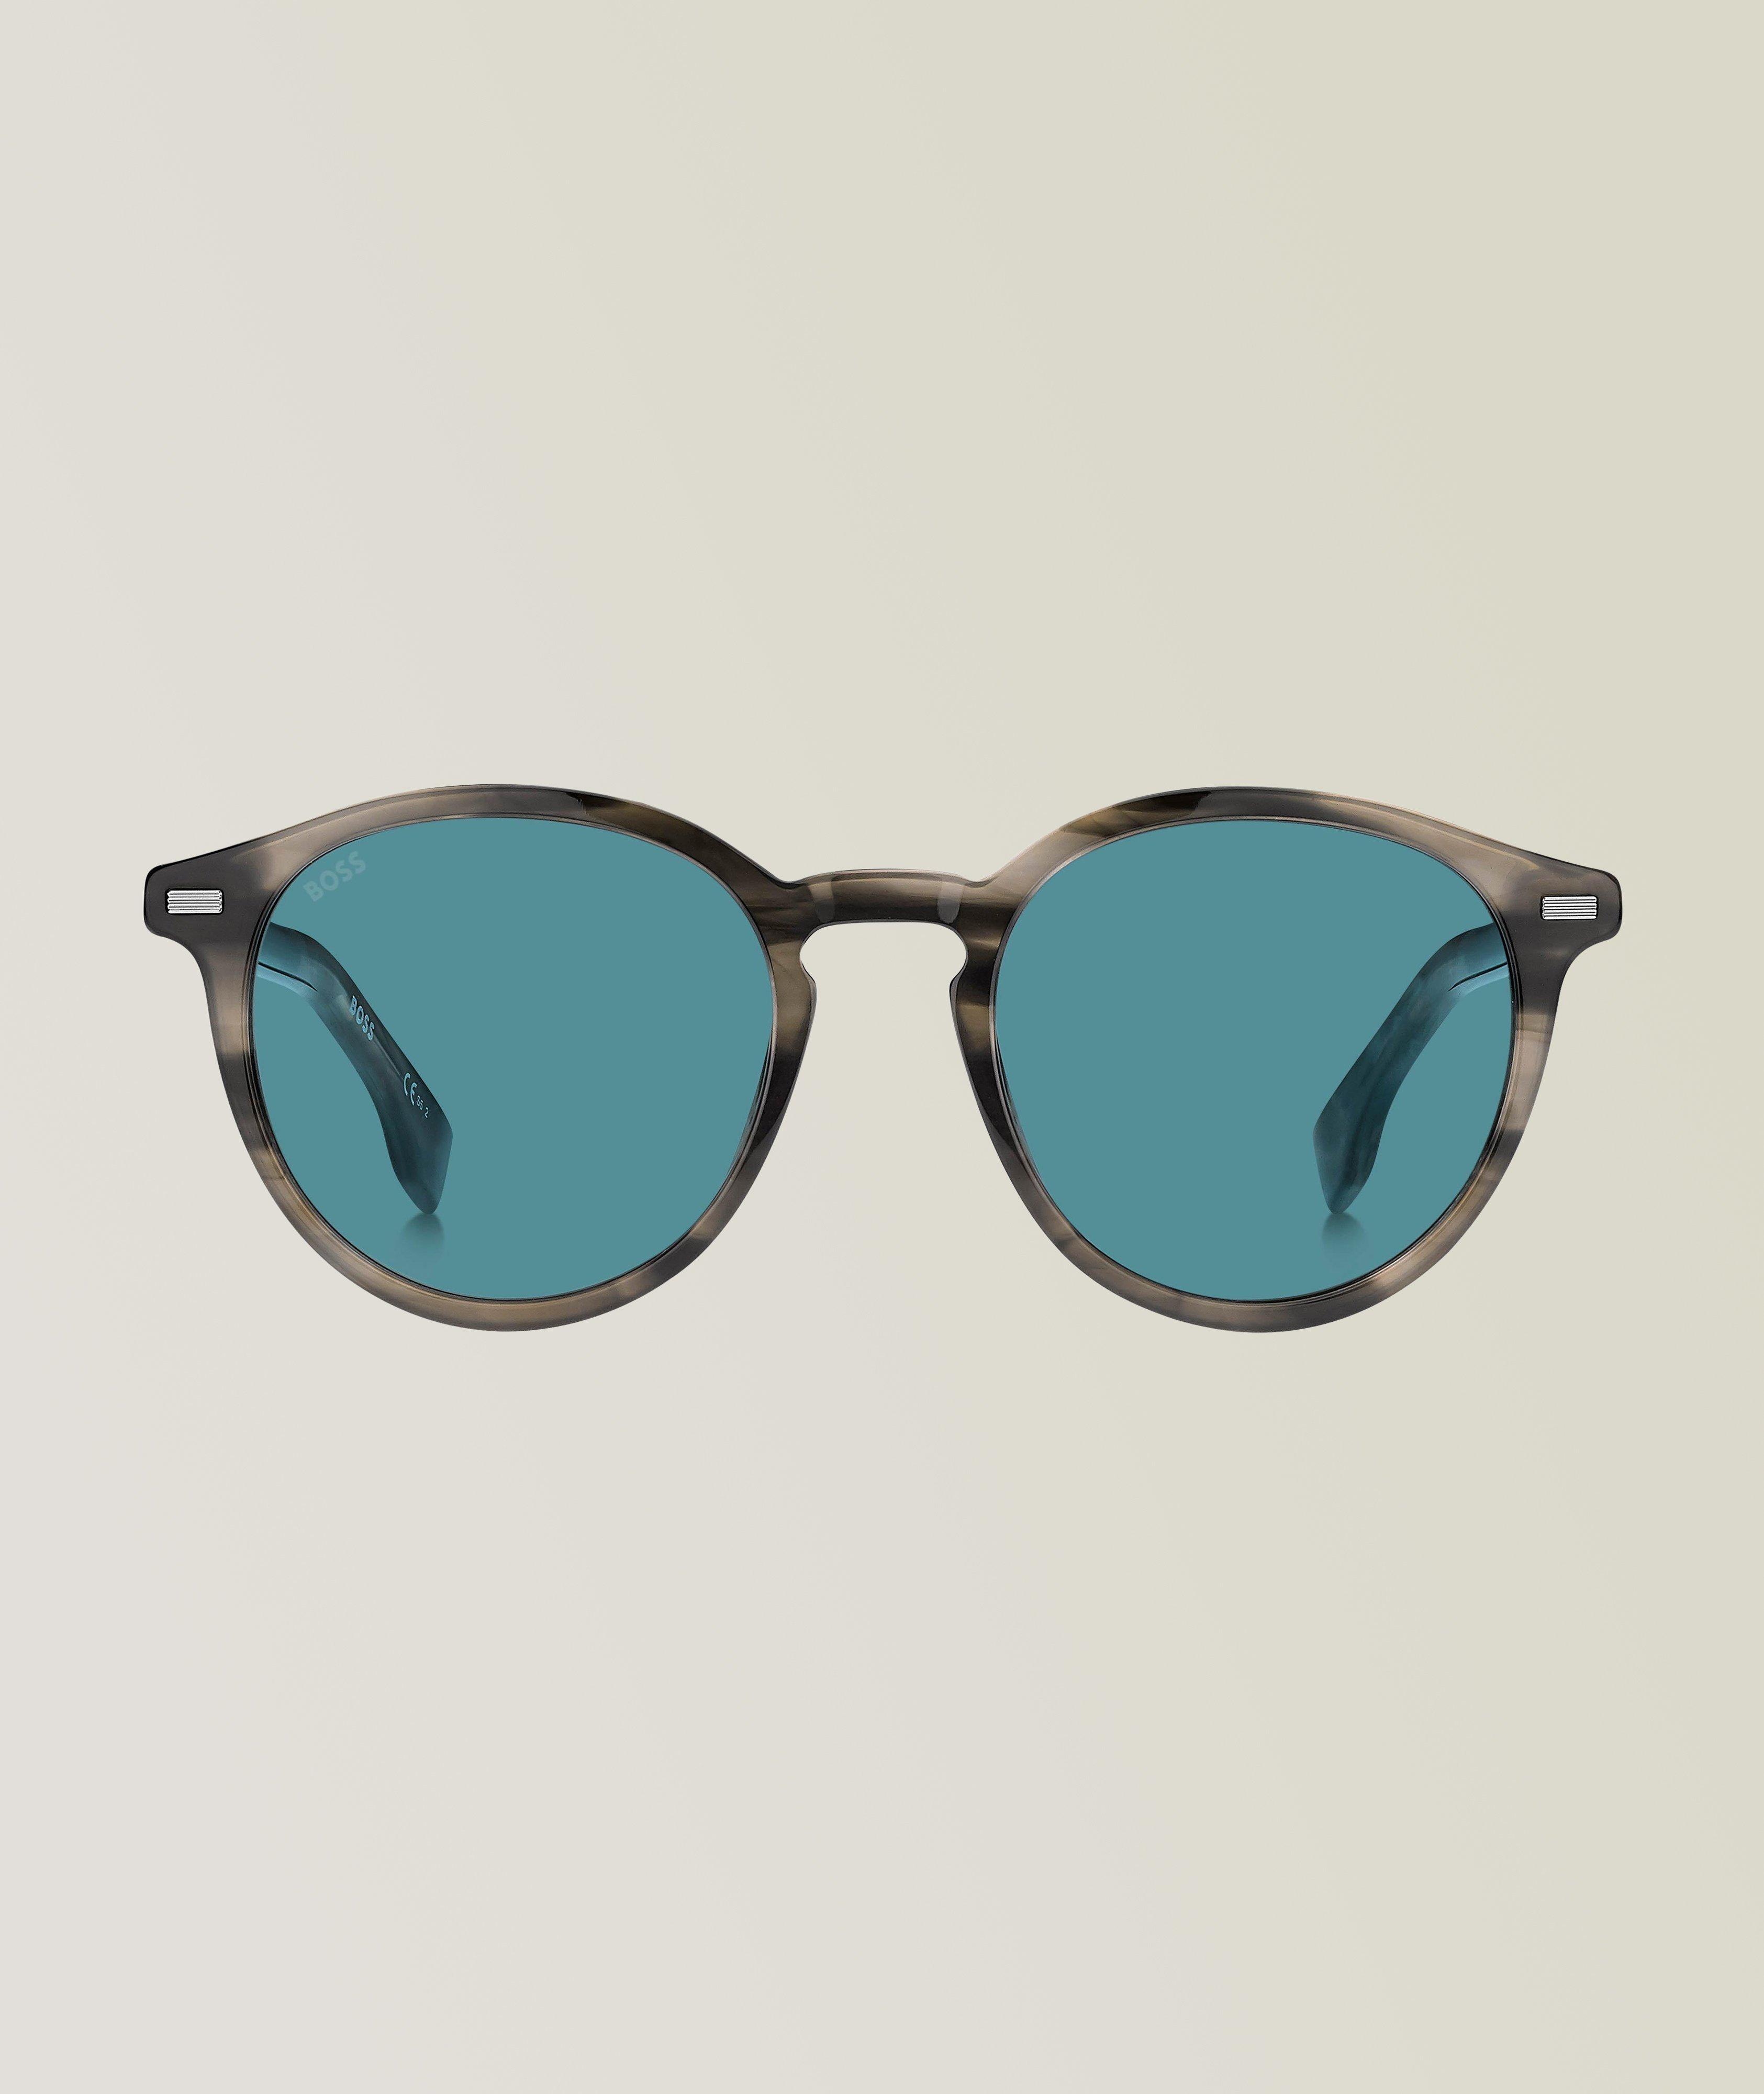 Hugo Boss Grey Brown Sunglasses With Blue Lenses